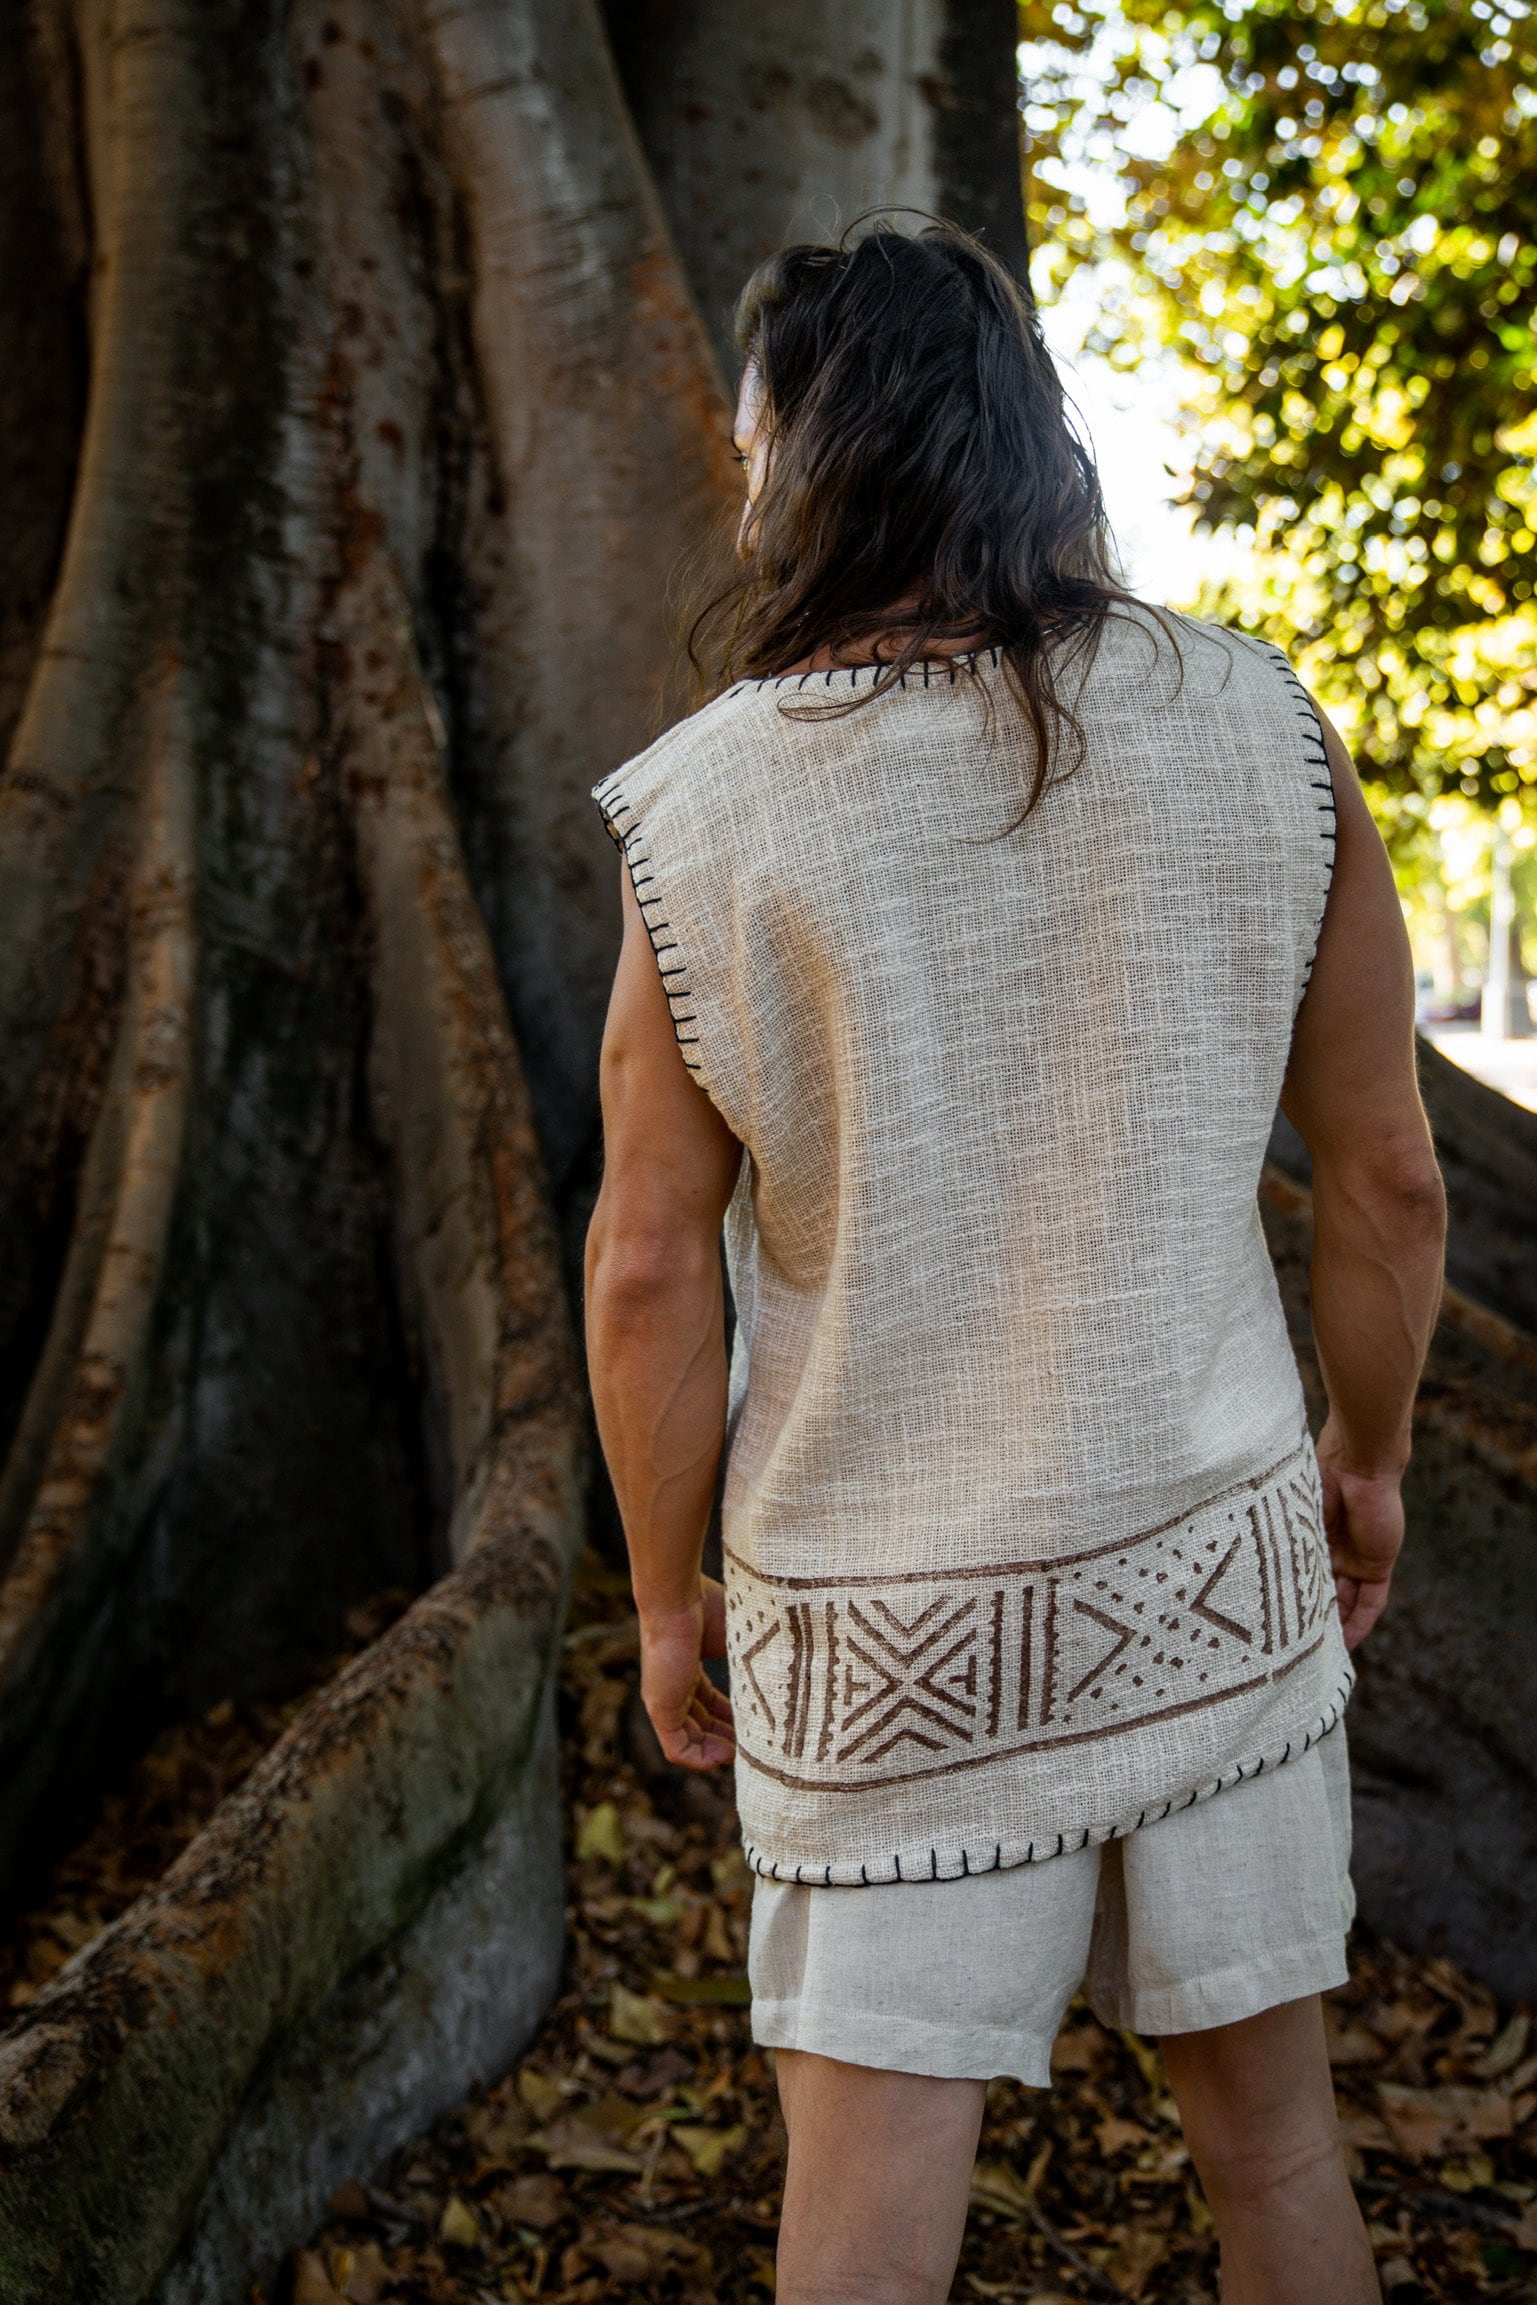 KAURI Beige Mens Sleeveless Tank Top Handmade Muscle Gypsy Earthy Shirt, Tribal Jungle Natural Savage Festival Rave AJJAYA Nomadic Primitive